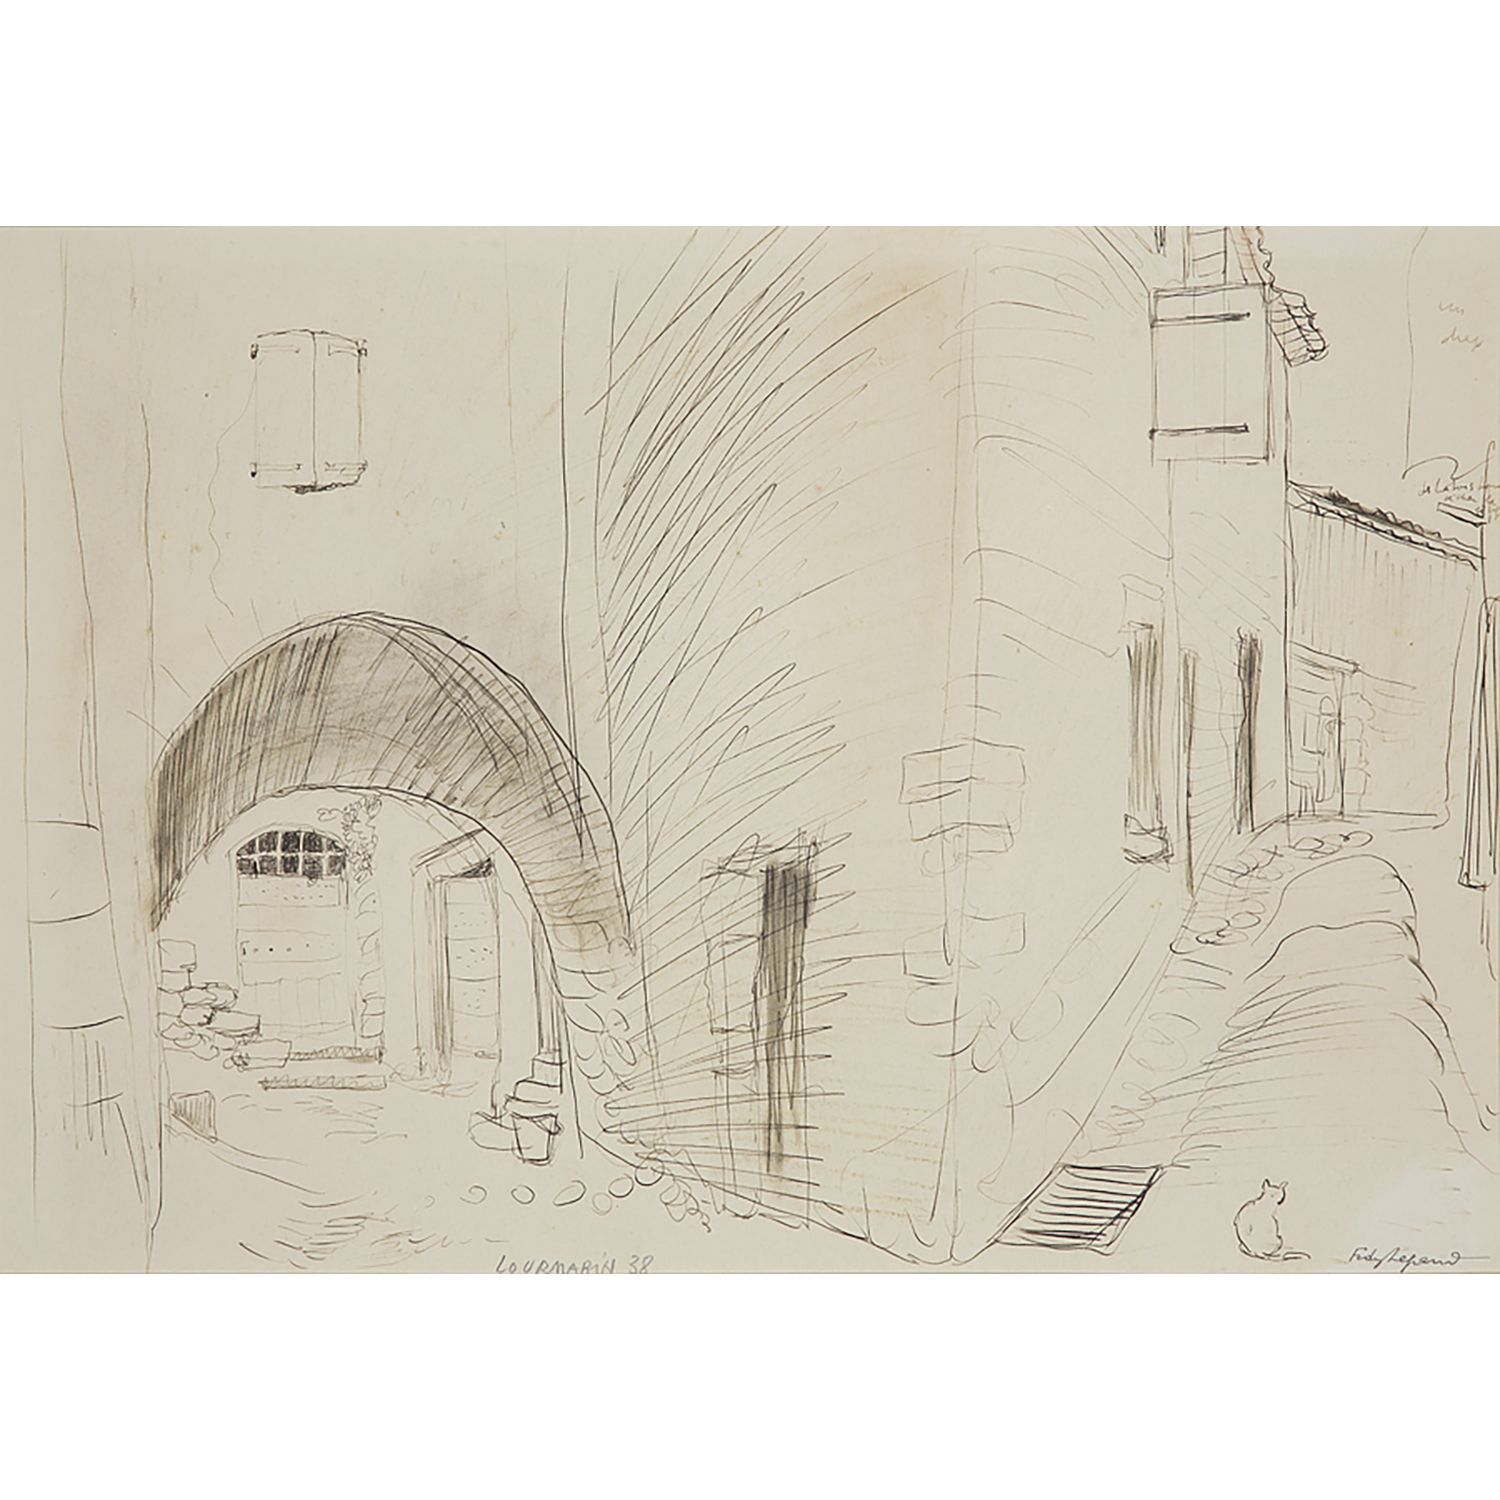 Null 埃迪-勒格朗(1892-1970)

鲁尔马林的小巷，1938年

纸上水墨

右下方有签名

坐落在中下部，日期为 "38"。

艺术家右上方的一些&hellip;